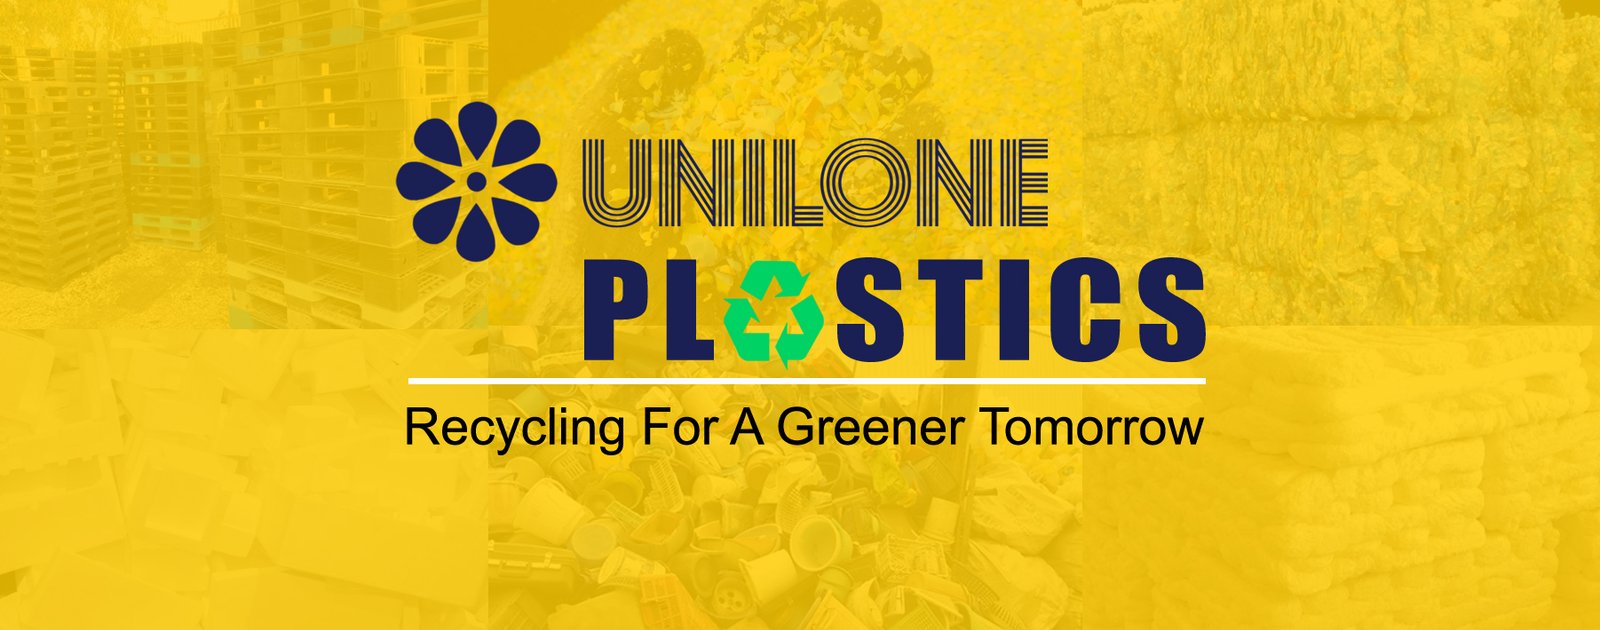 unilone plastics recycling about